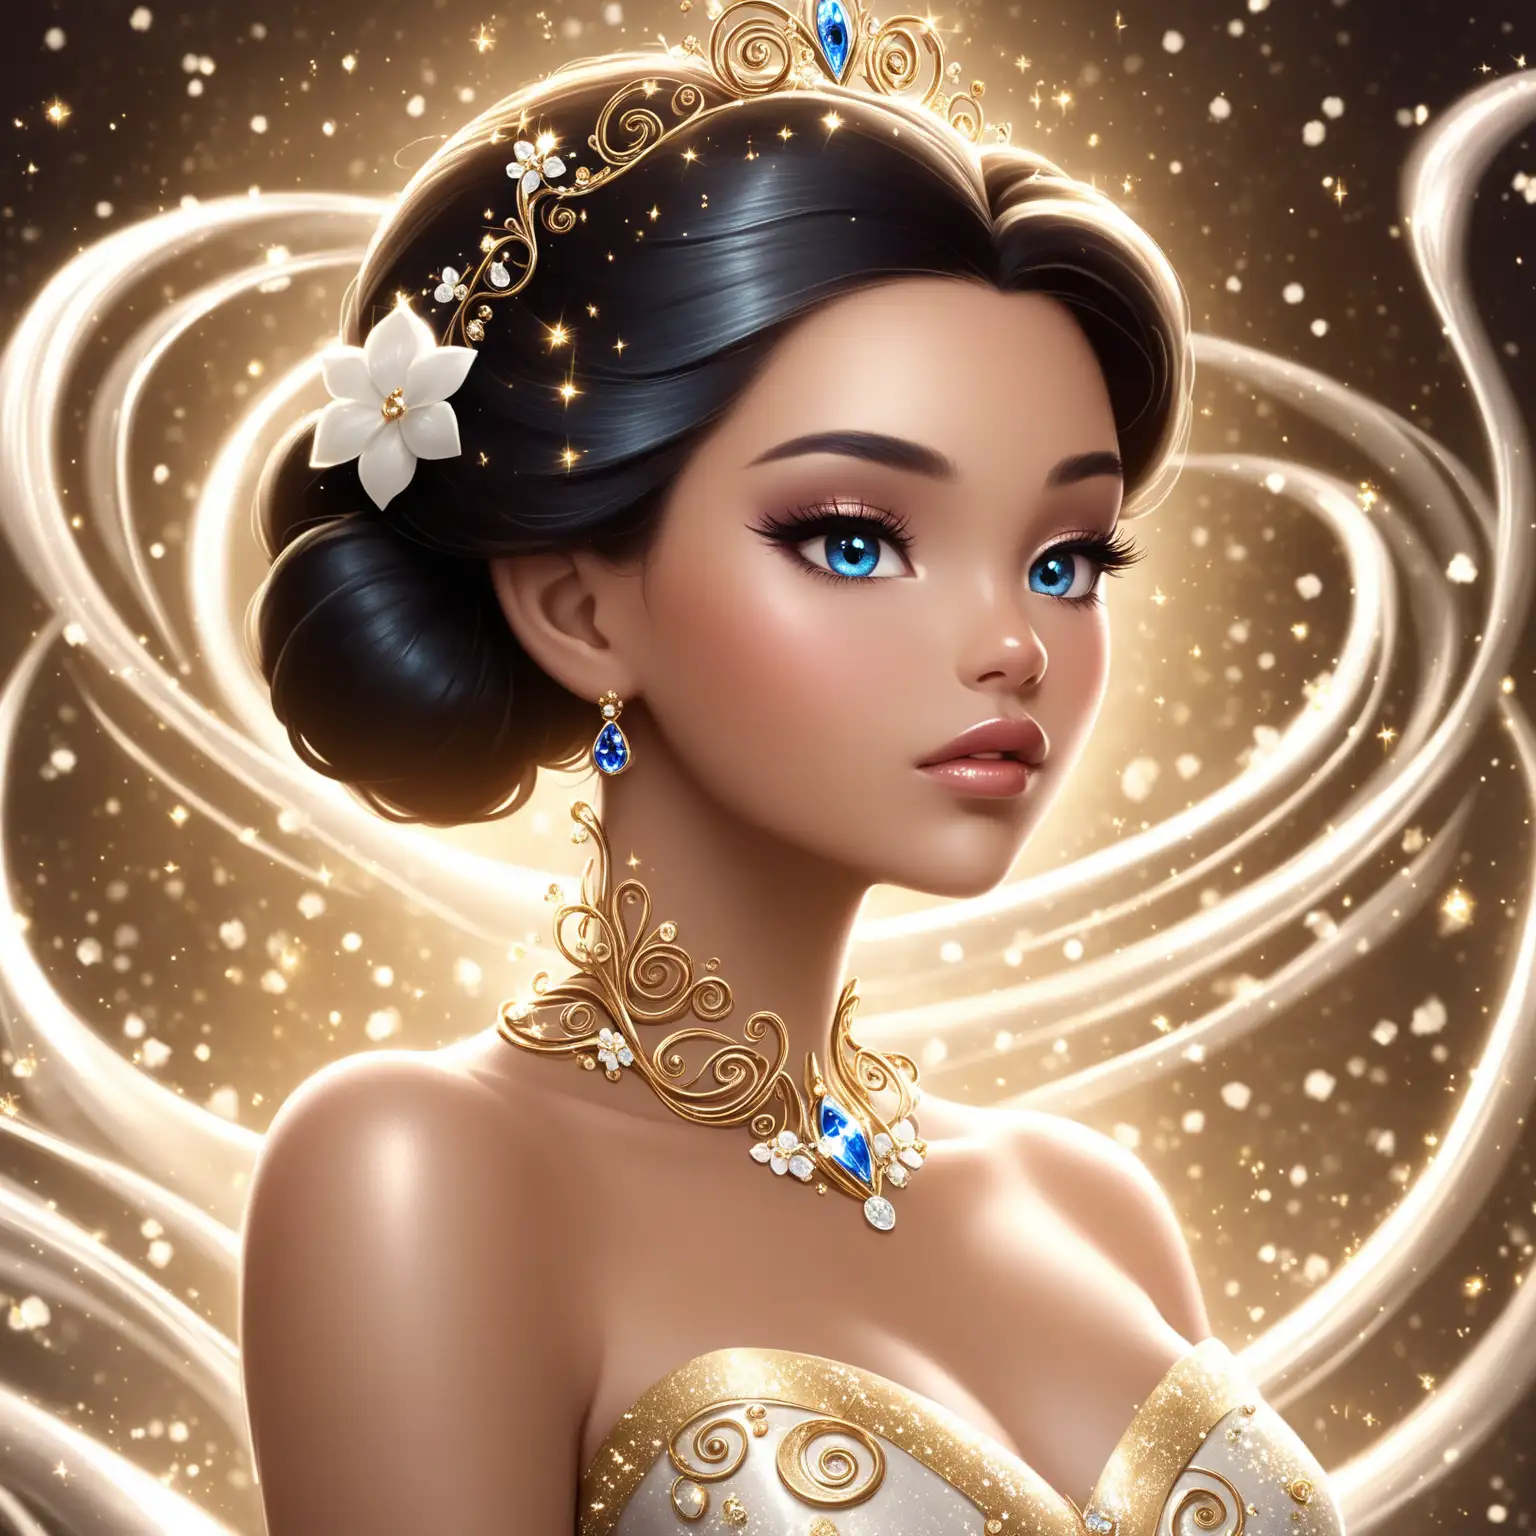 Elegant Disney Princess Portrait with Floral Accents and Magic Sparkles